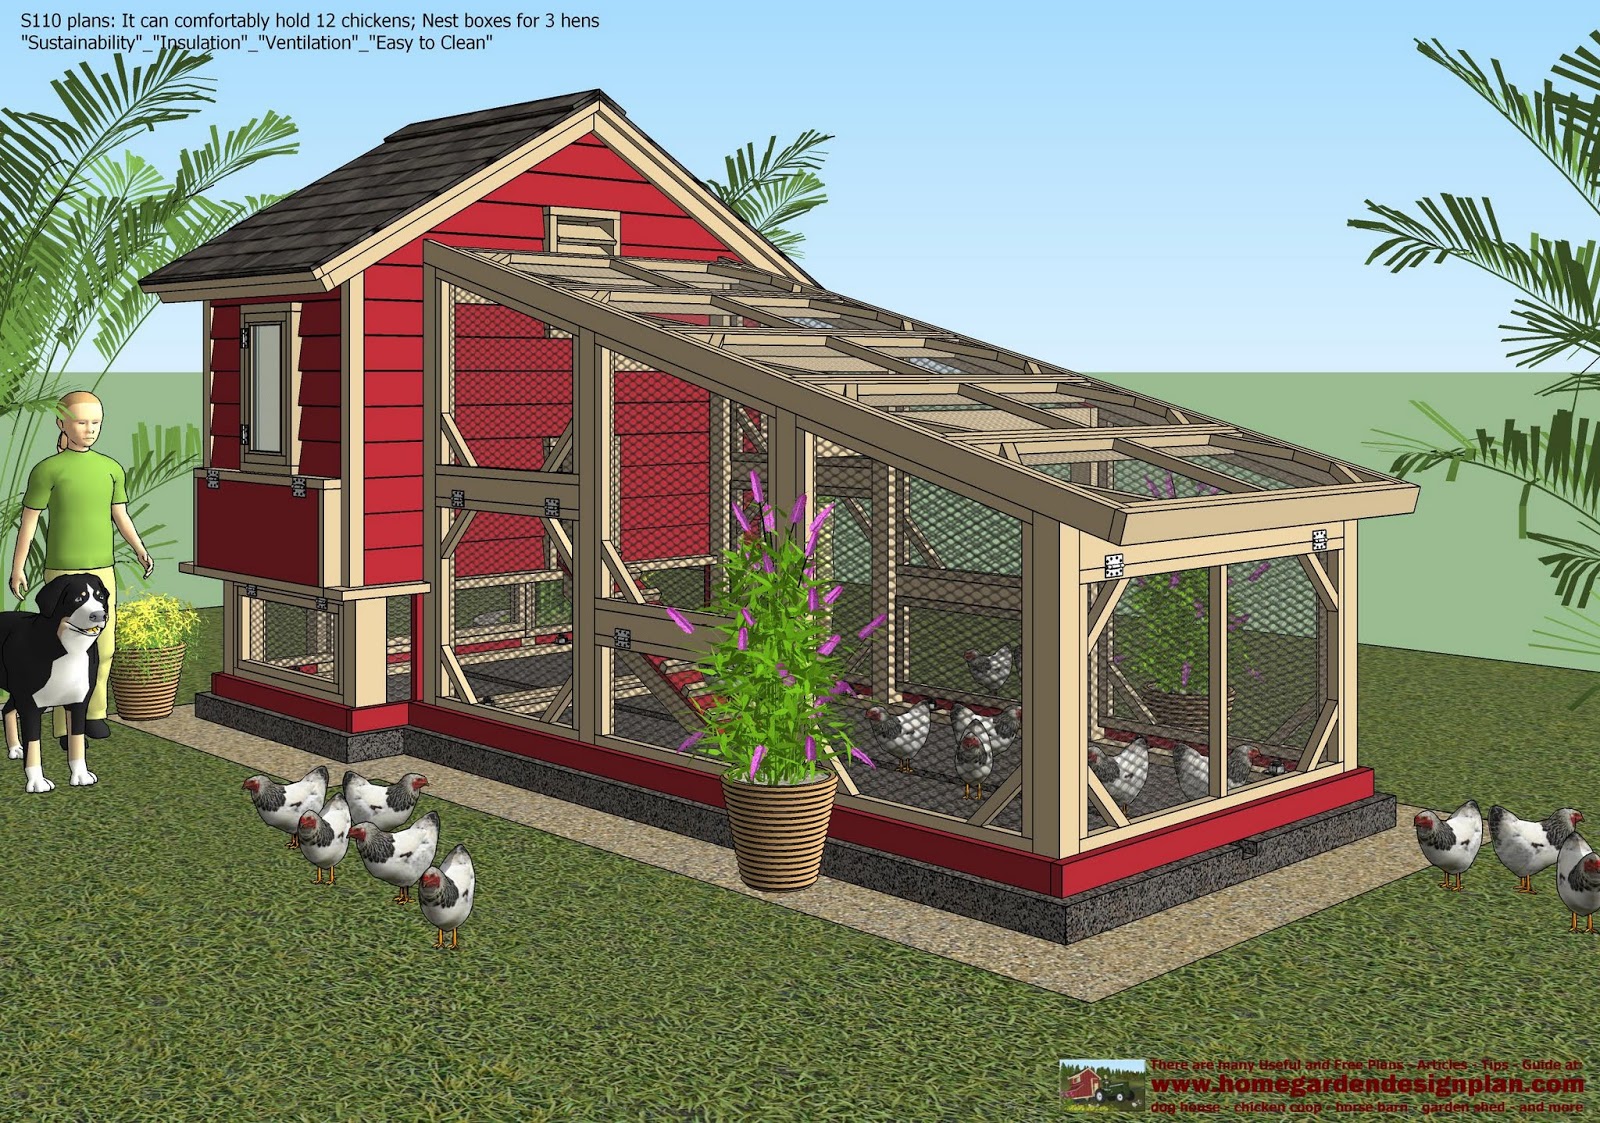 home garden plans: S110 - Chicken Coop Plans Construction 